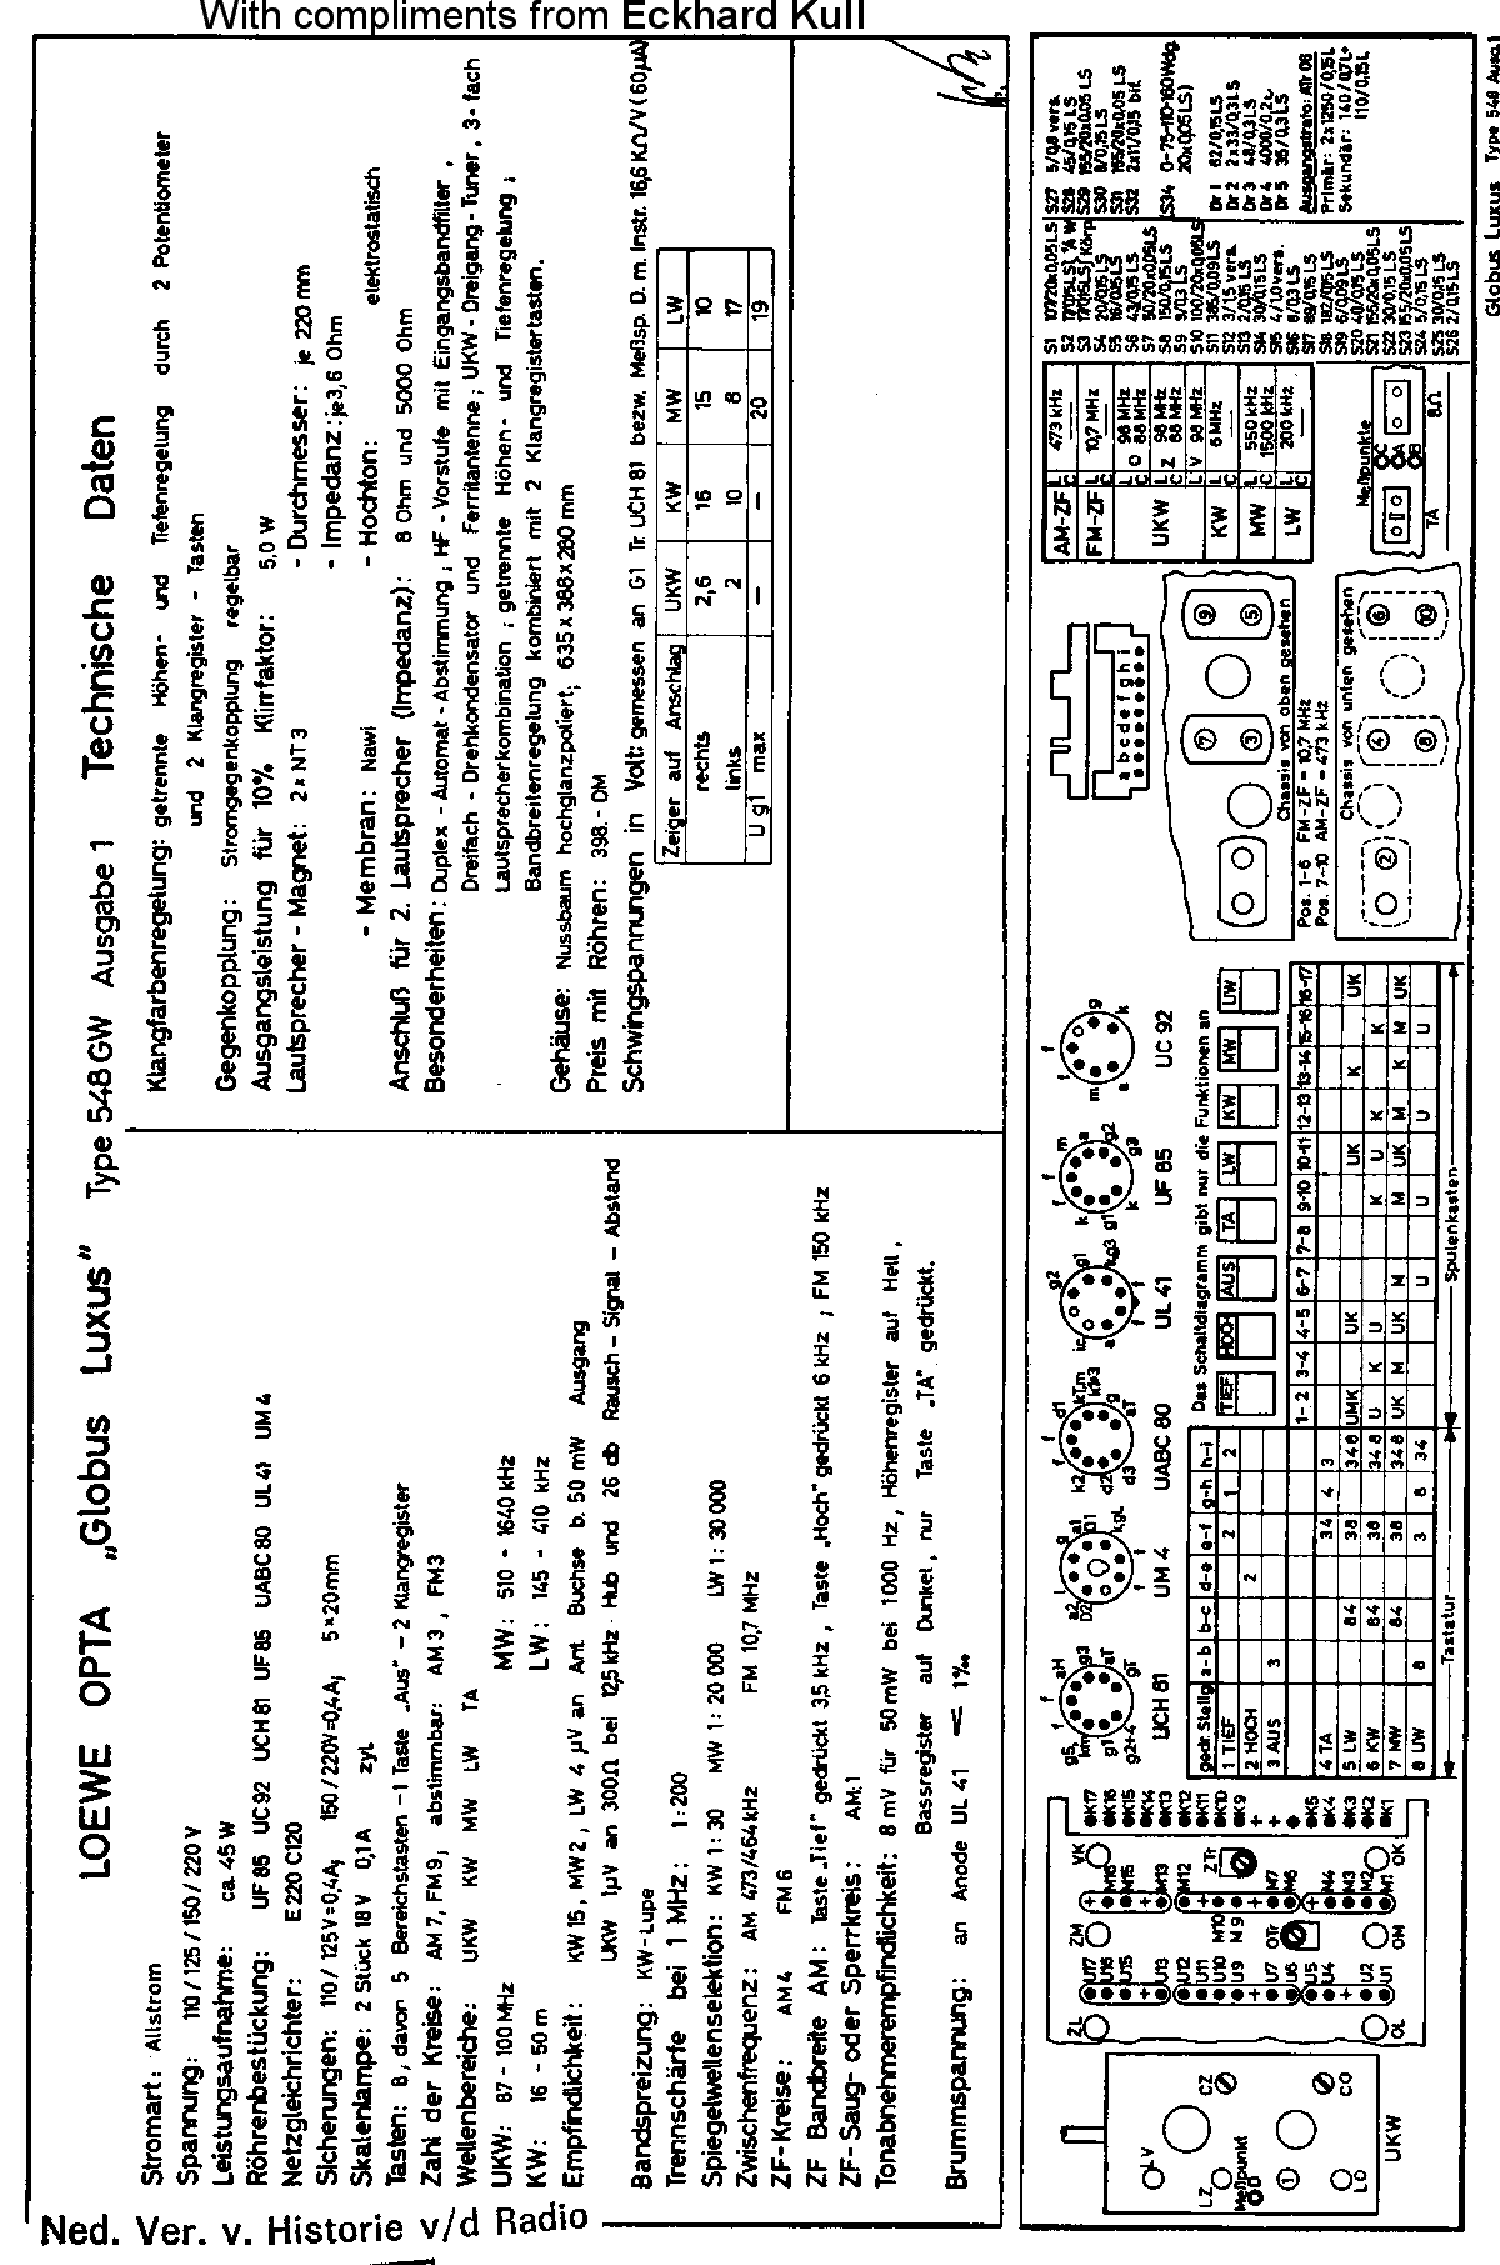 LOEWEOPTA 548GW GLOBUS LUXUS AM-FM RECEIVER 1954 SM service manual (1st page)